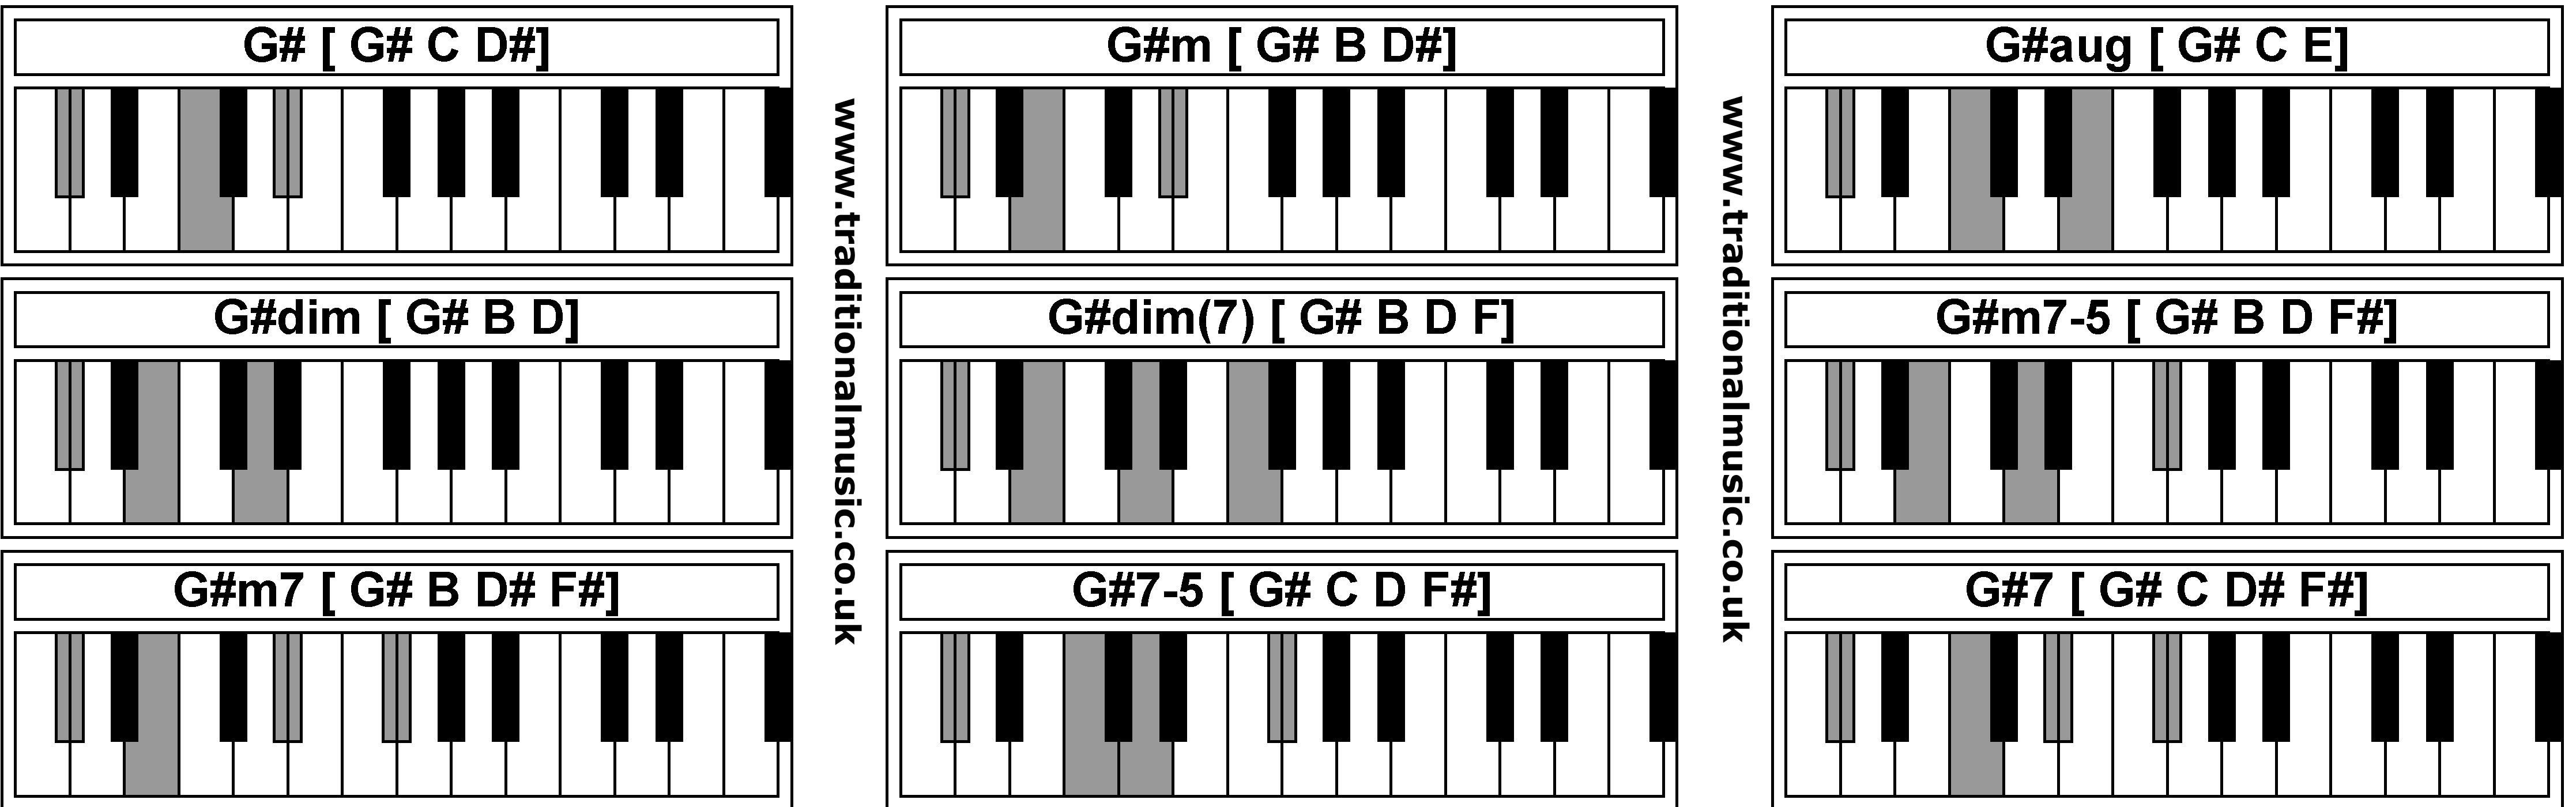 G# Piano Chord Piano Chords G Gm Gaug Gdim Gdim Gm7 5 Gm7